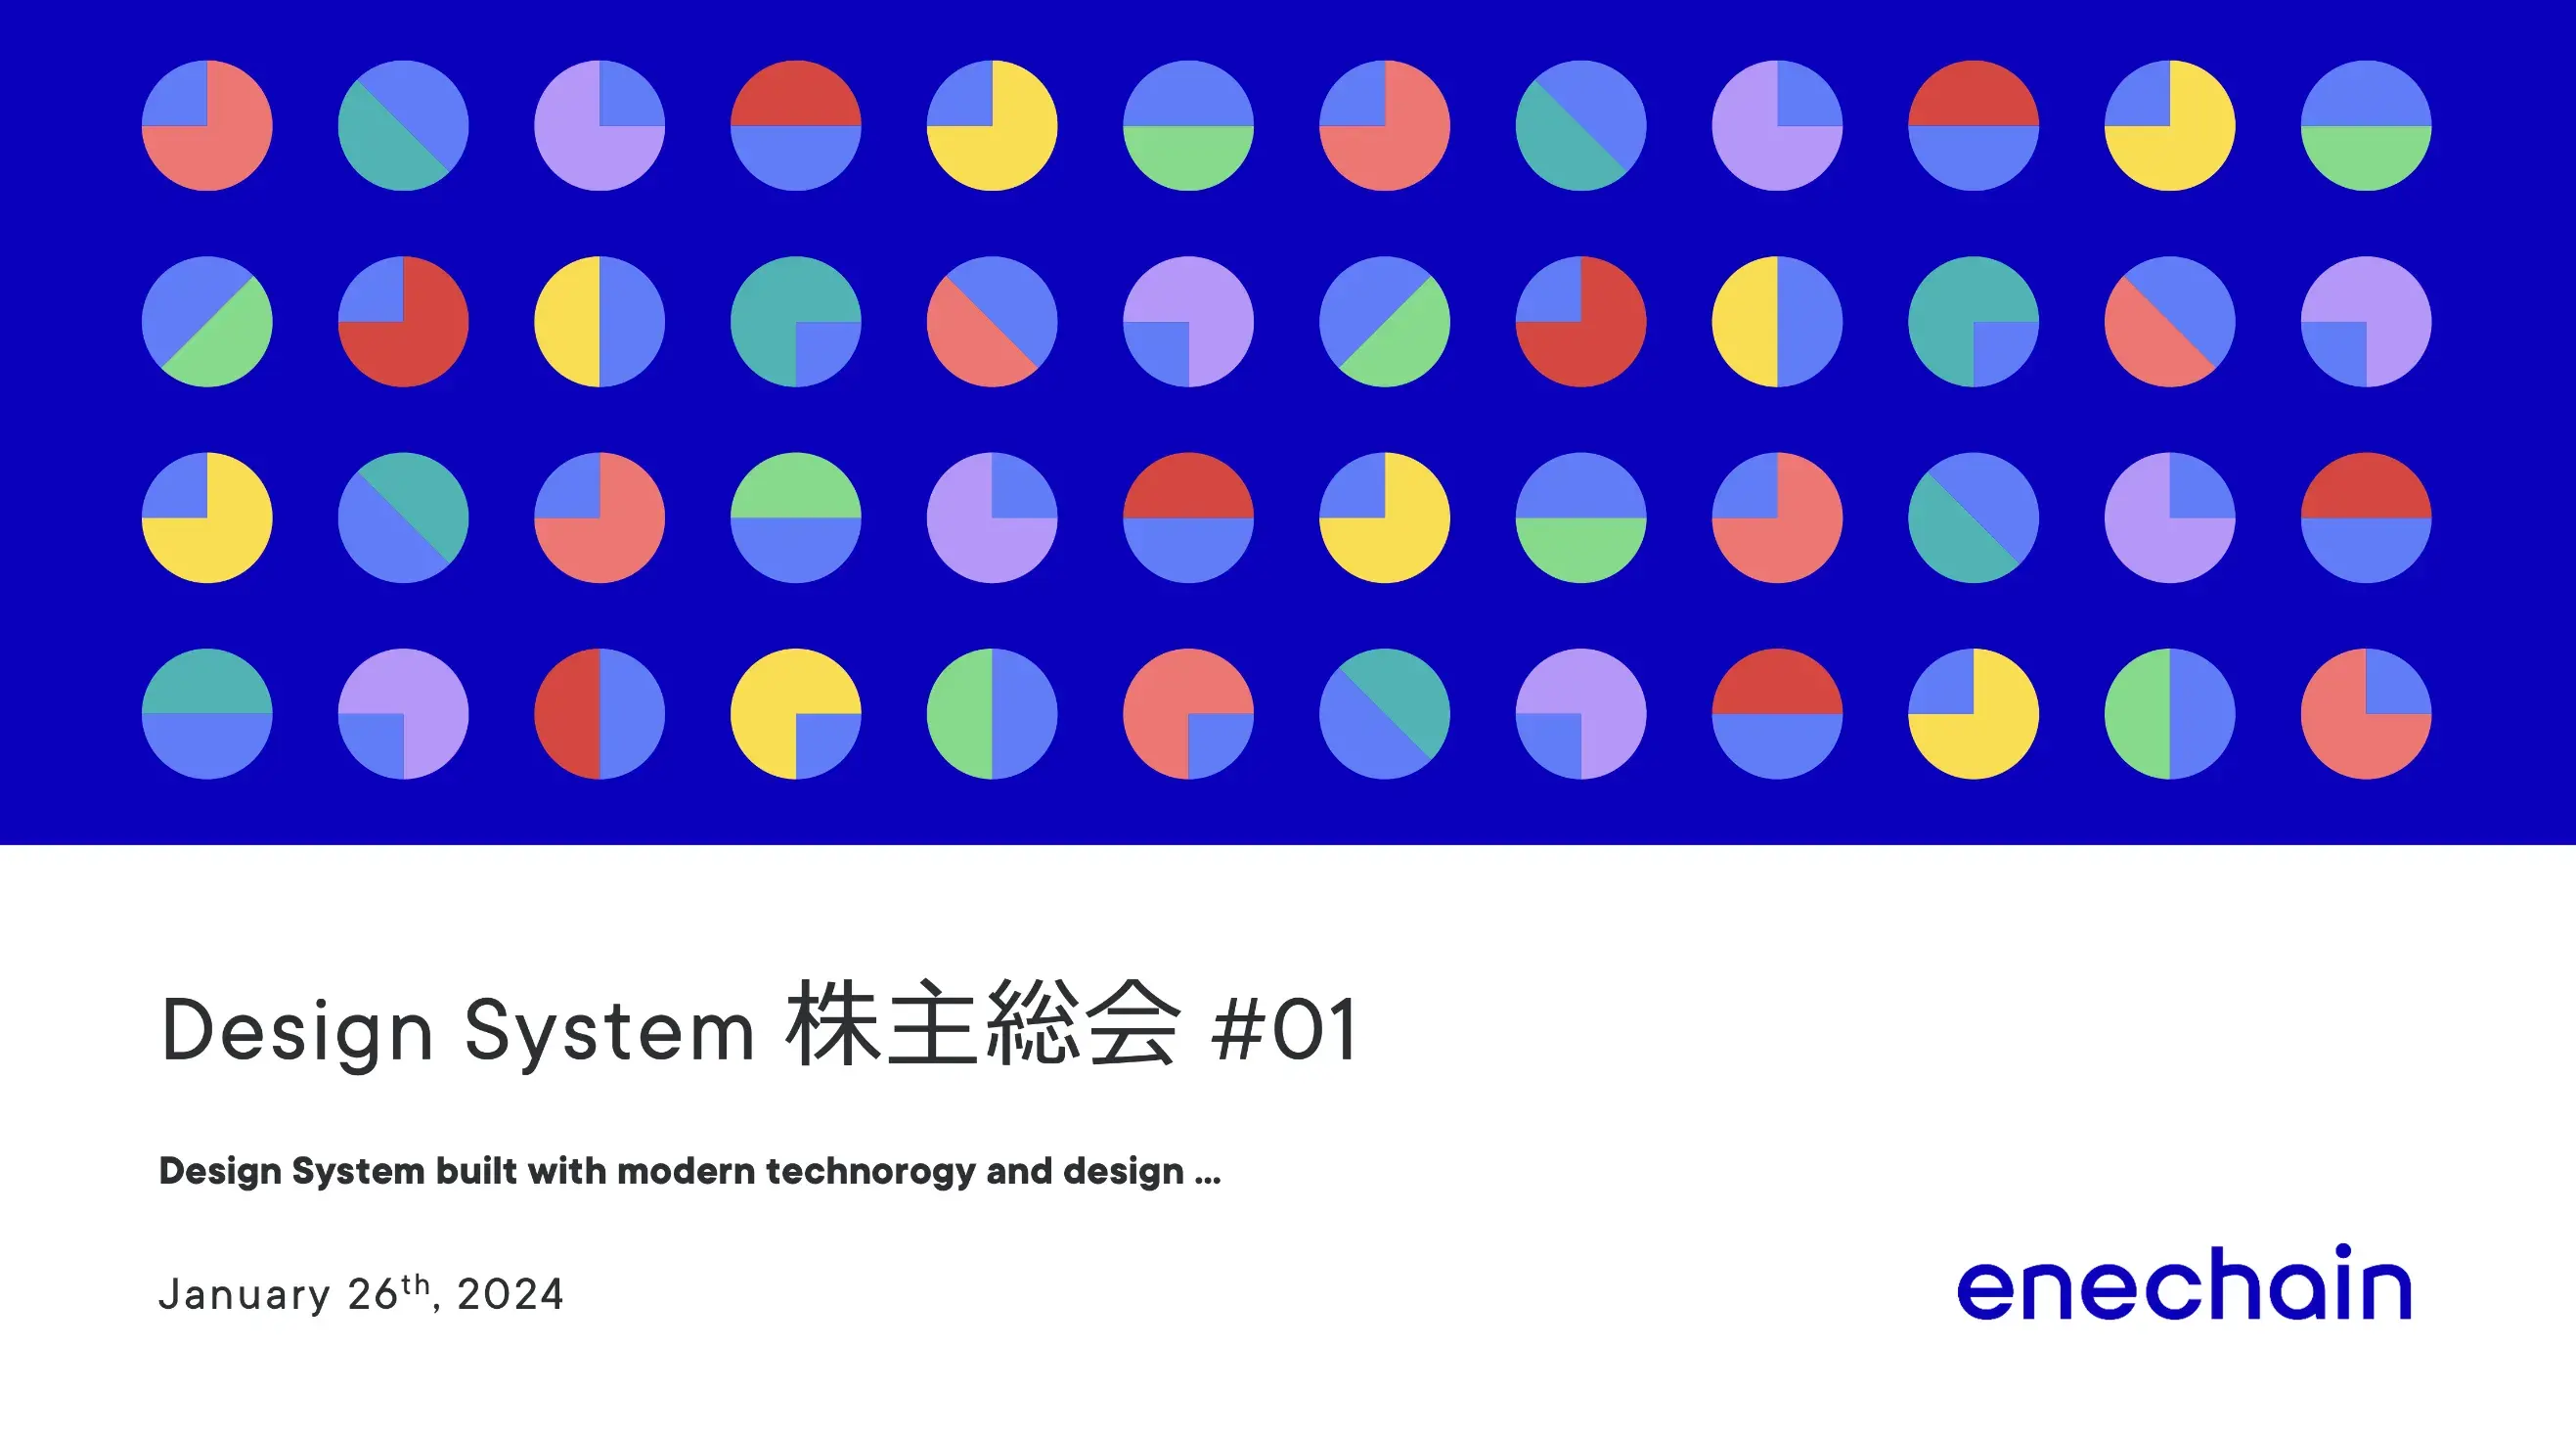 Design System株主総会 #01